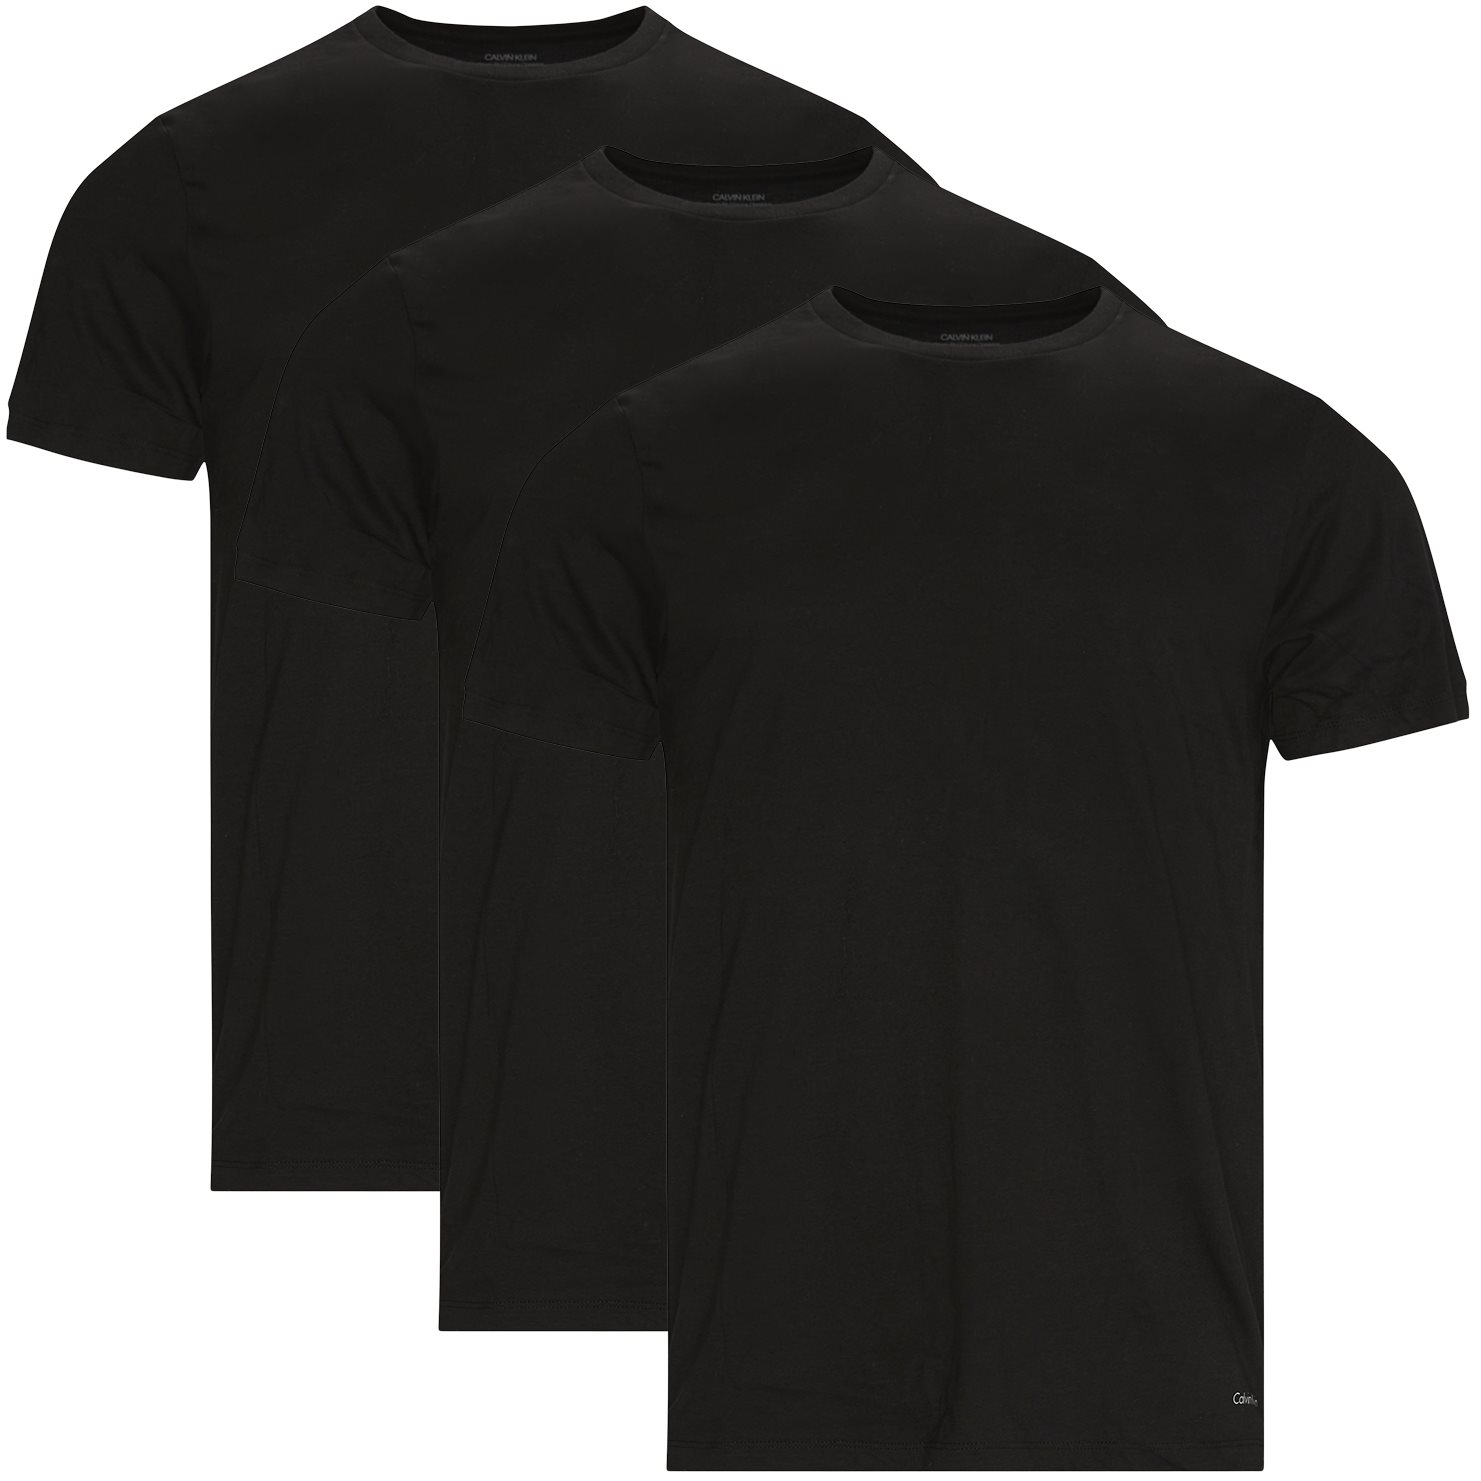 3-Pack Crewneck T-Shirts - T-shirts - Classic fit - Black